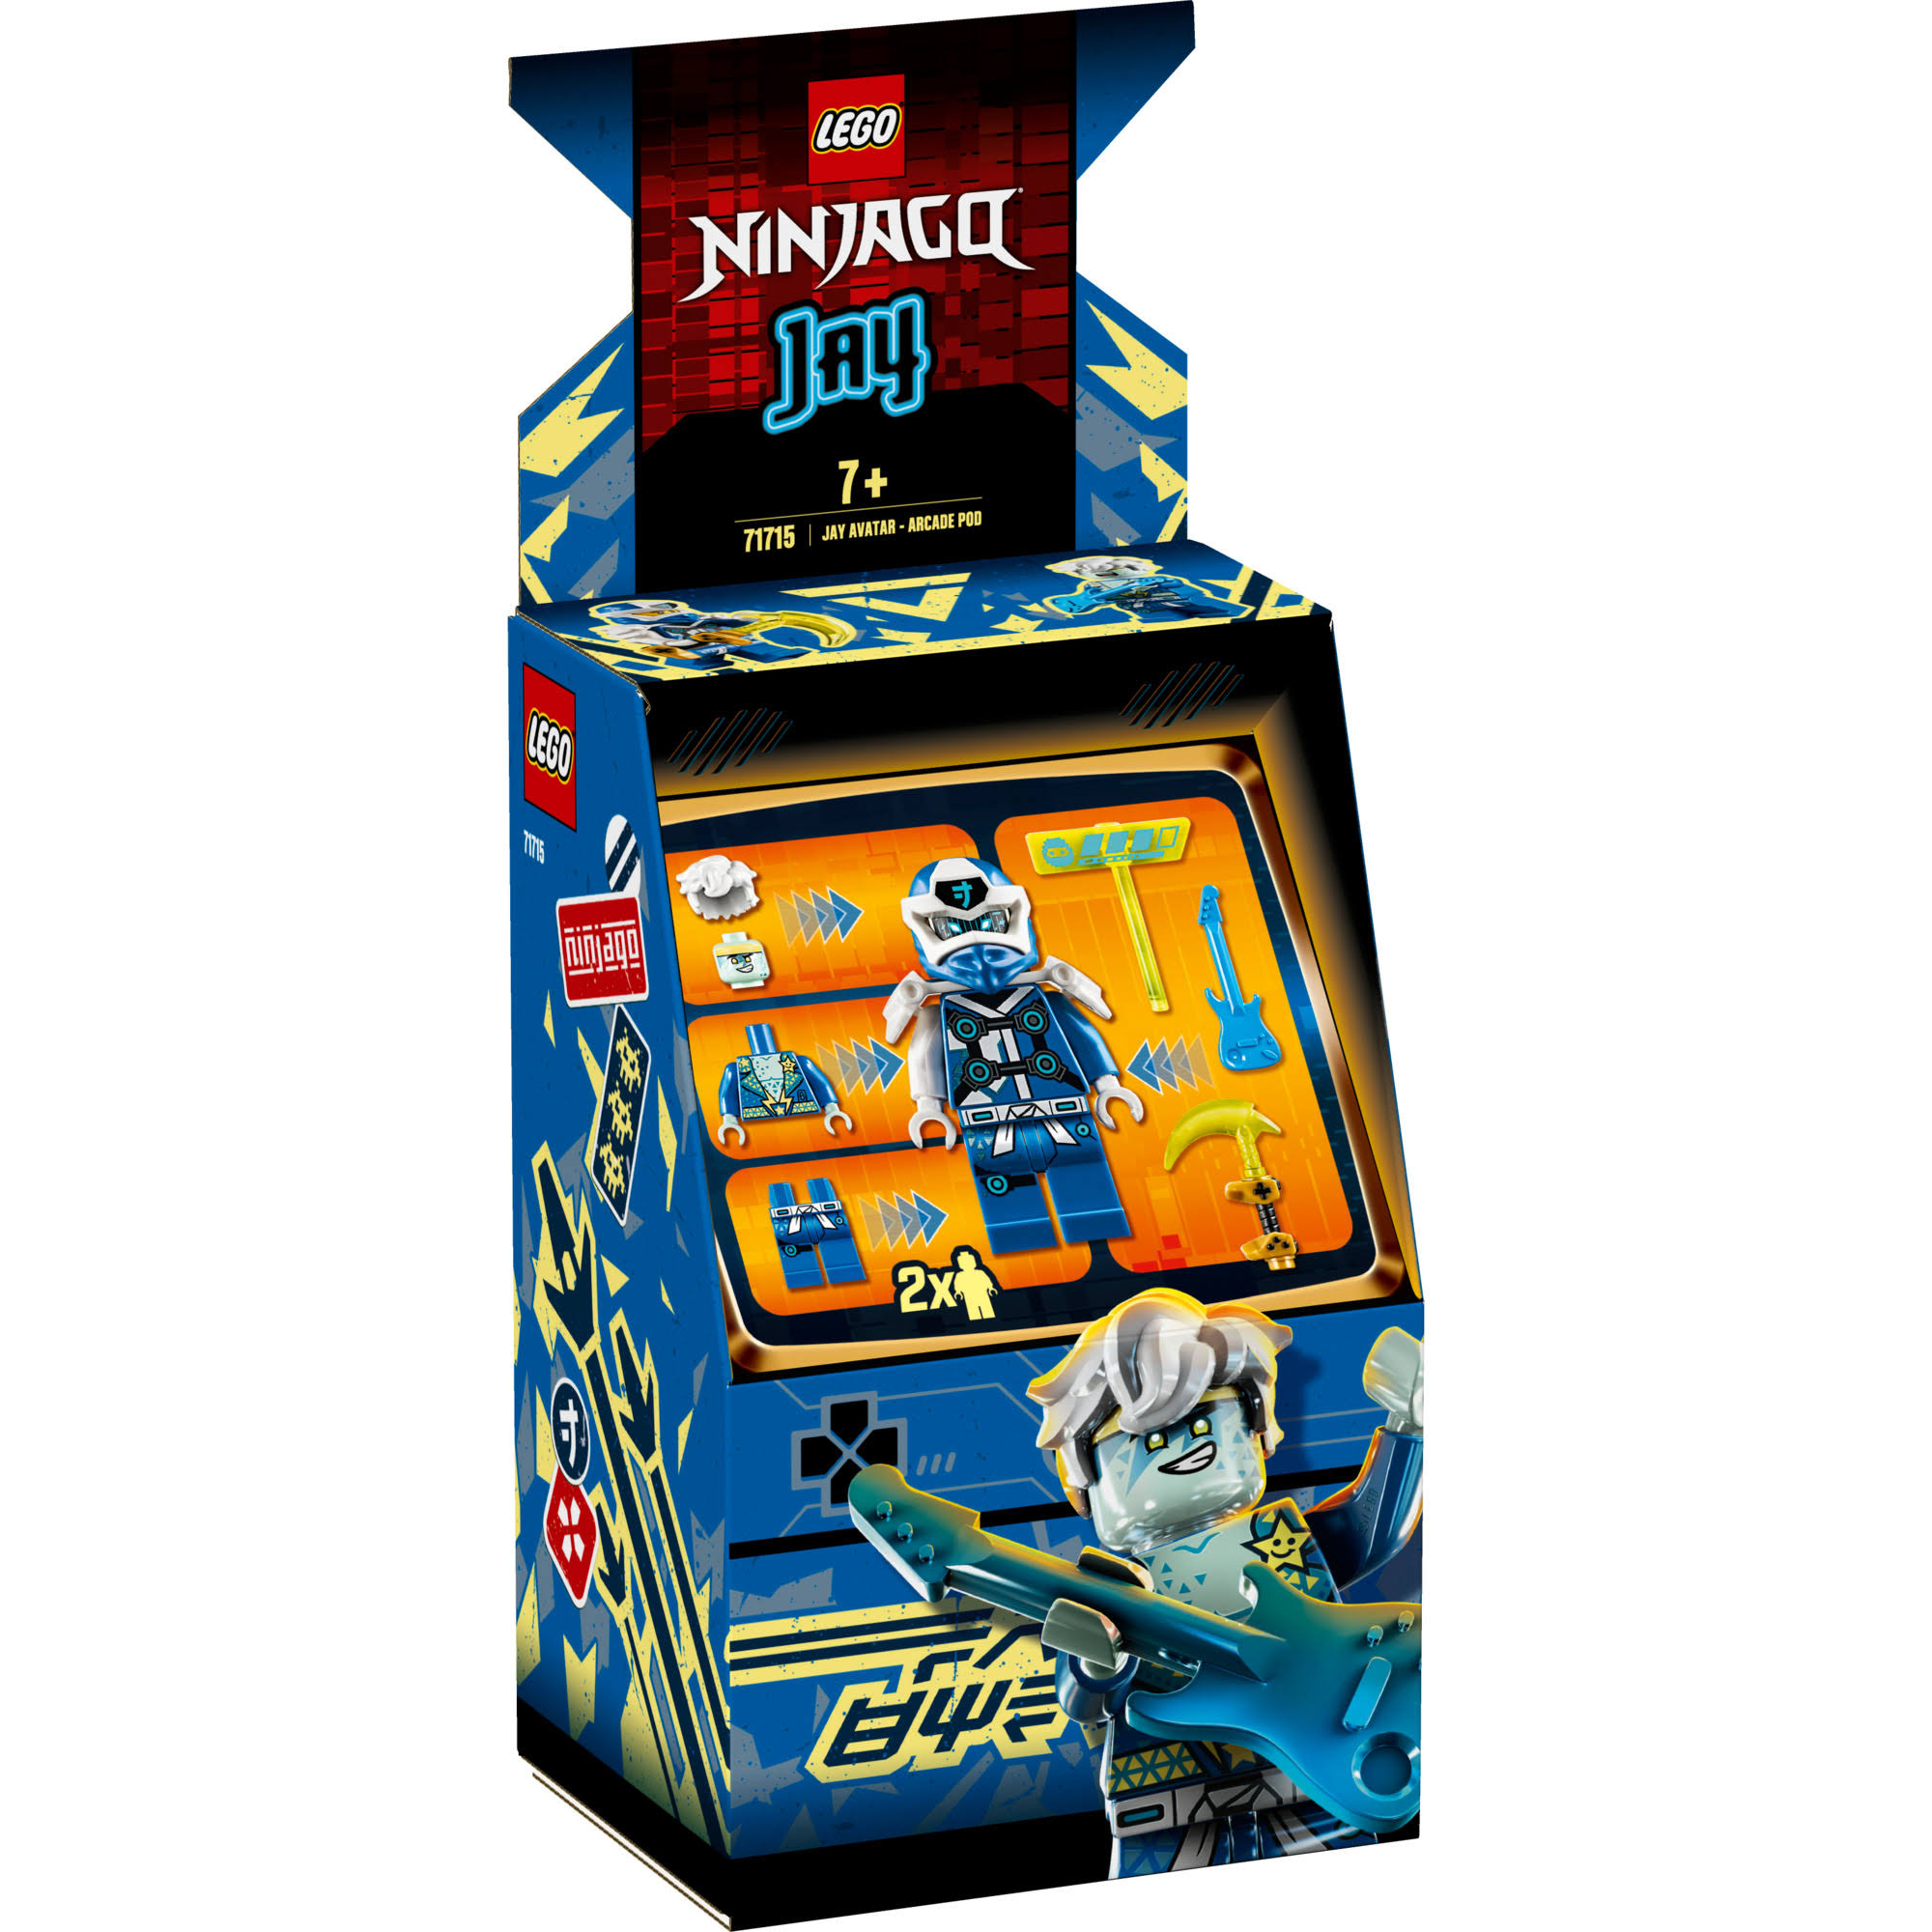 Lego Ninjago Avatar Jay Arcade Kapsel 71715